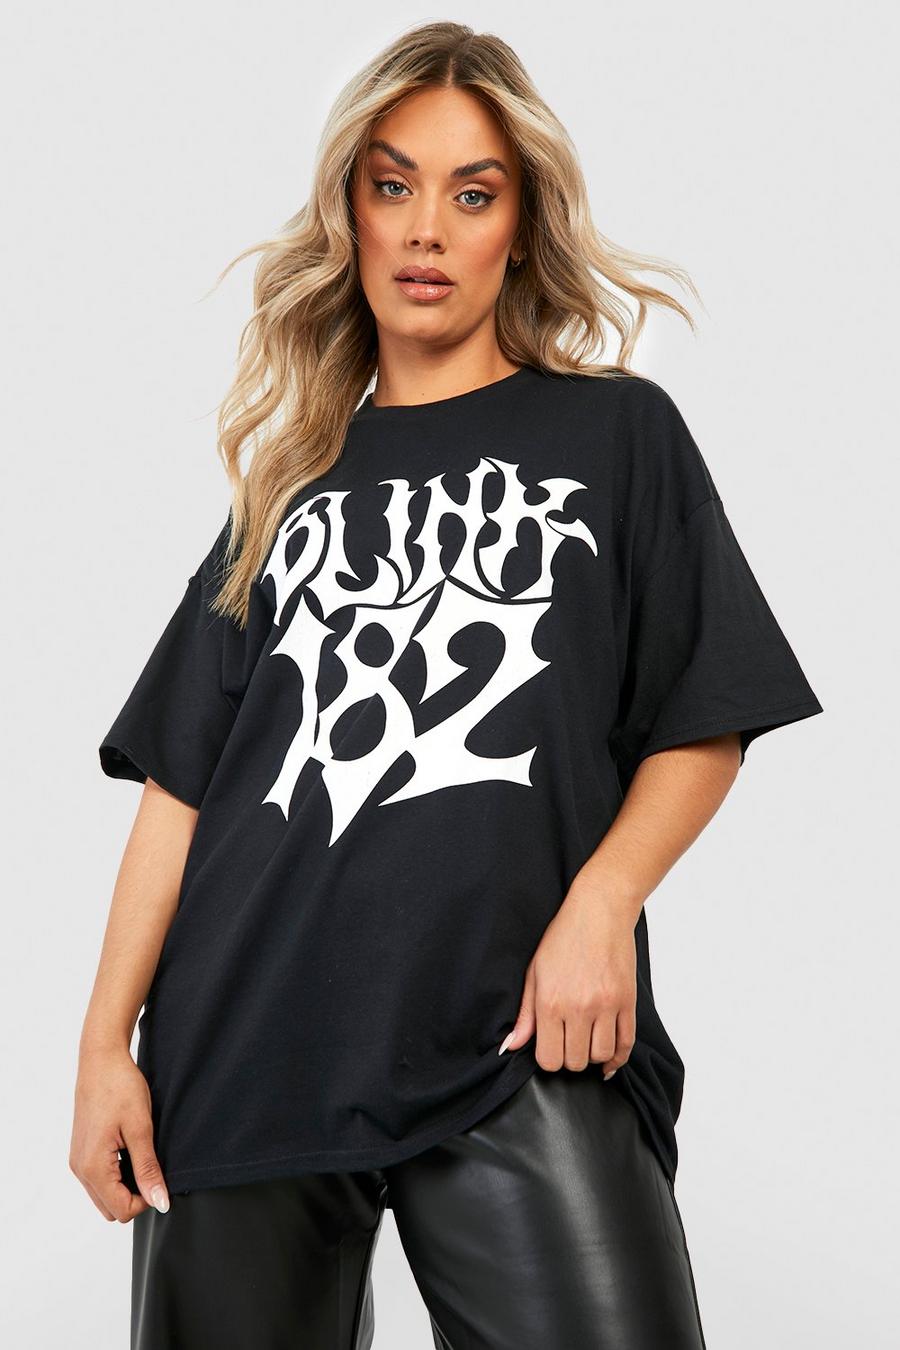 Plus Oversize T-Shirt mit lizenziertem Blink 182 Print, Black